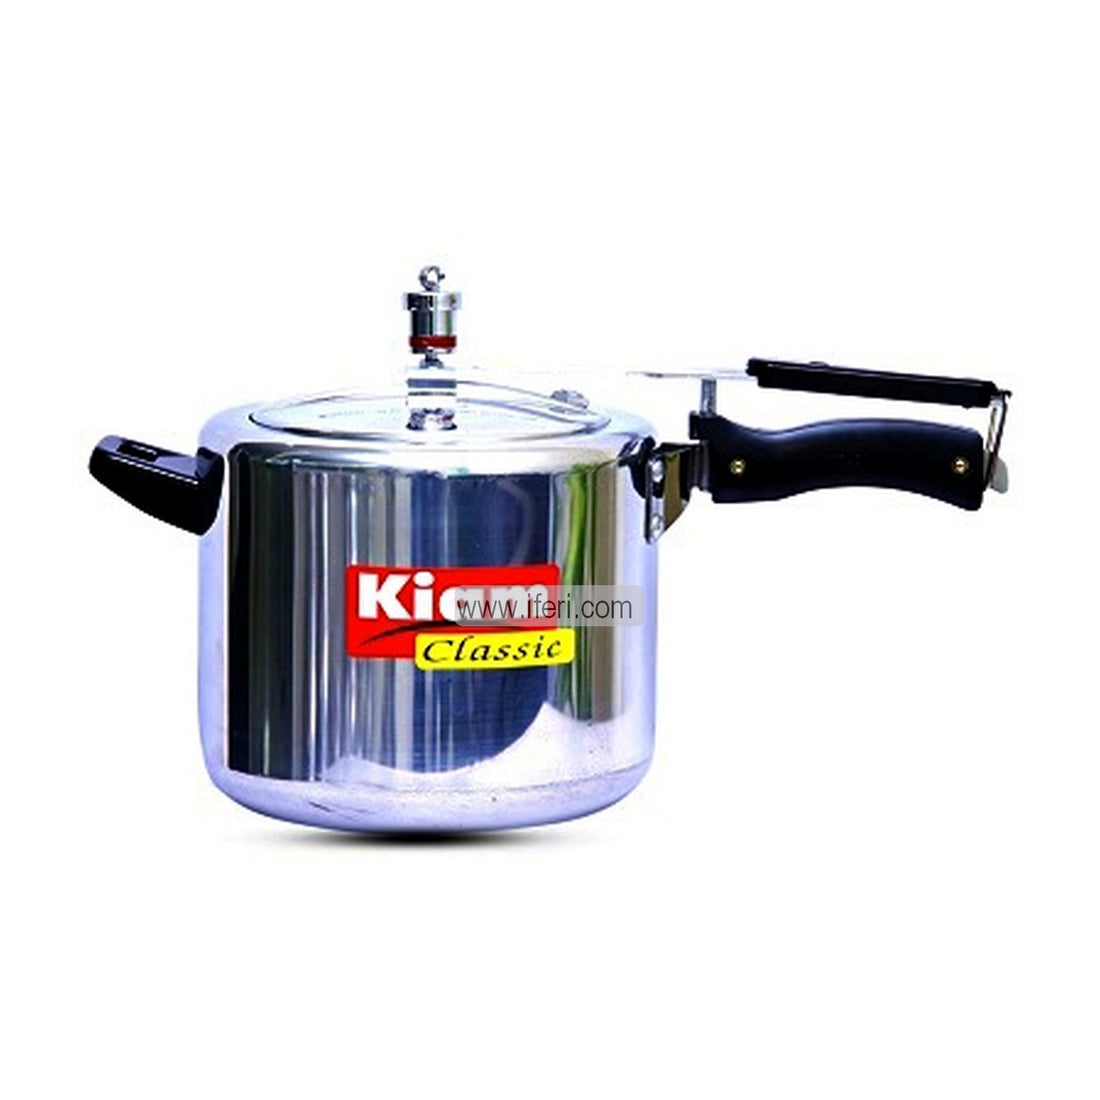 5.5 liter Kiam Classic pressure-cooker BCG3314